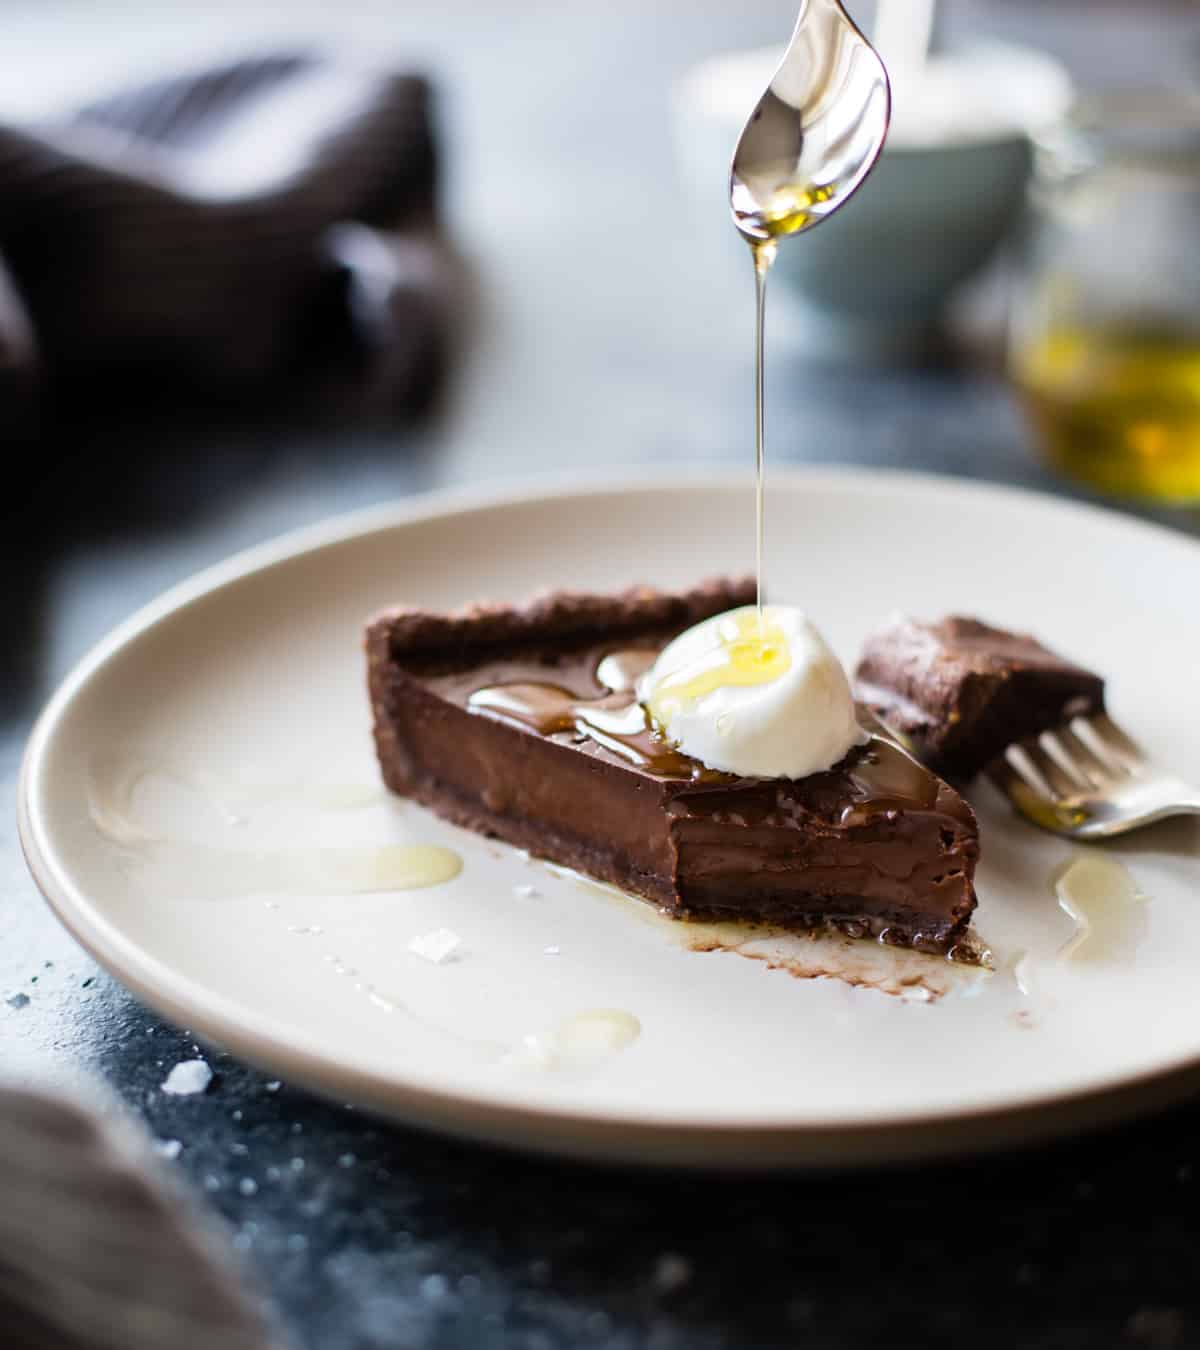 Gluten-Free Chocolate Bergamot Truffle Tart with Olive Oil and Flaky Salt from Alternative Baker cookbook